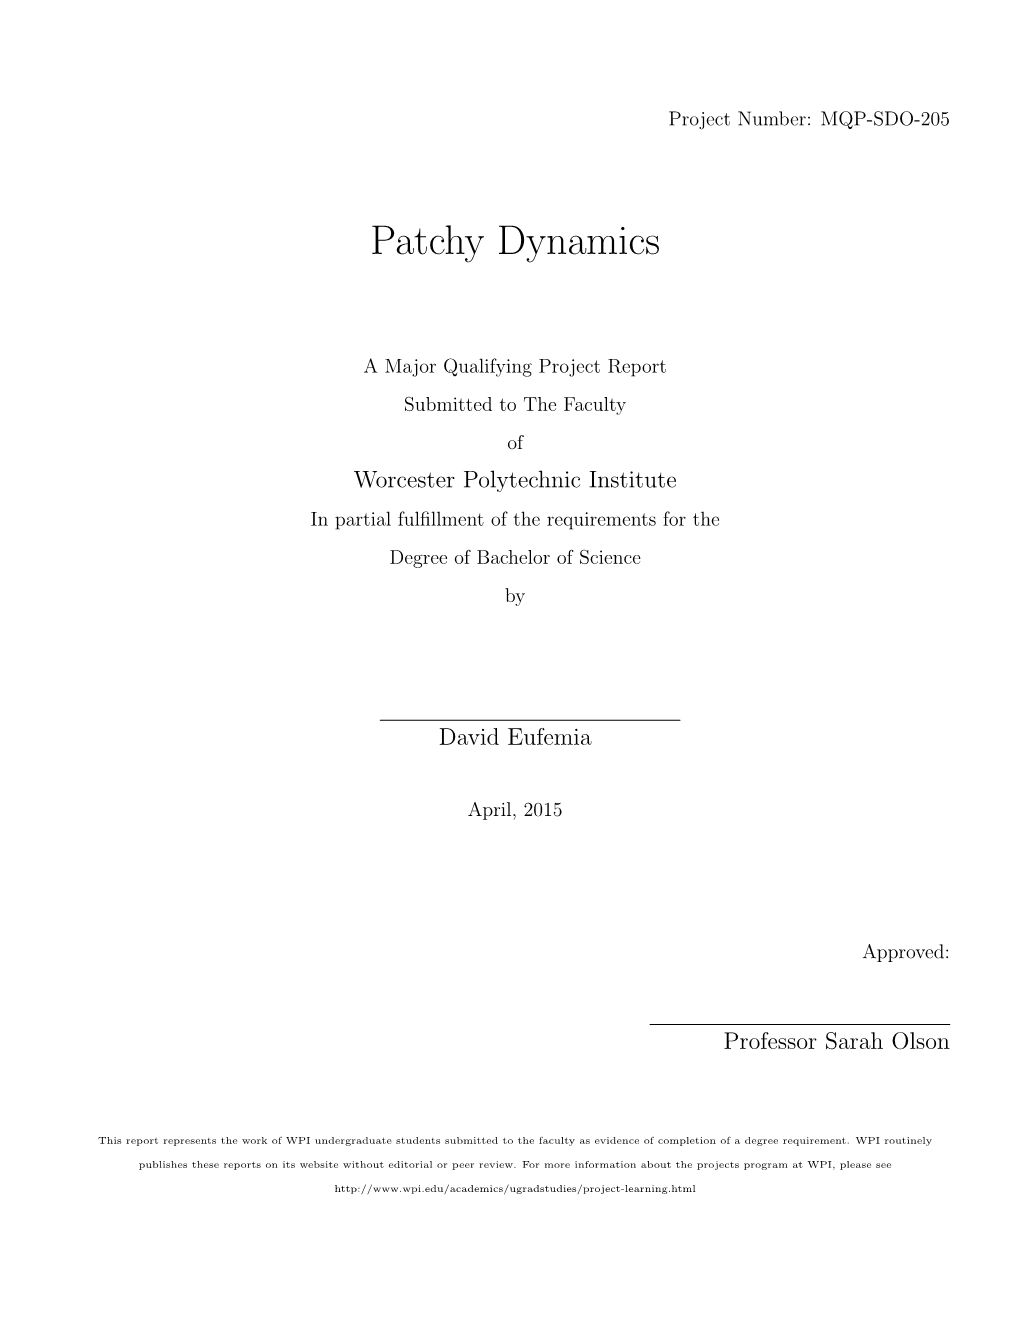 Patchy Dynamics